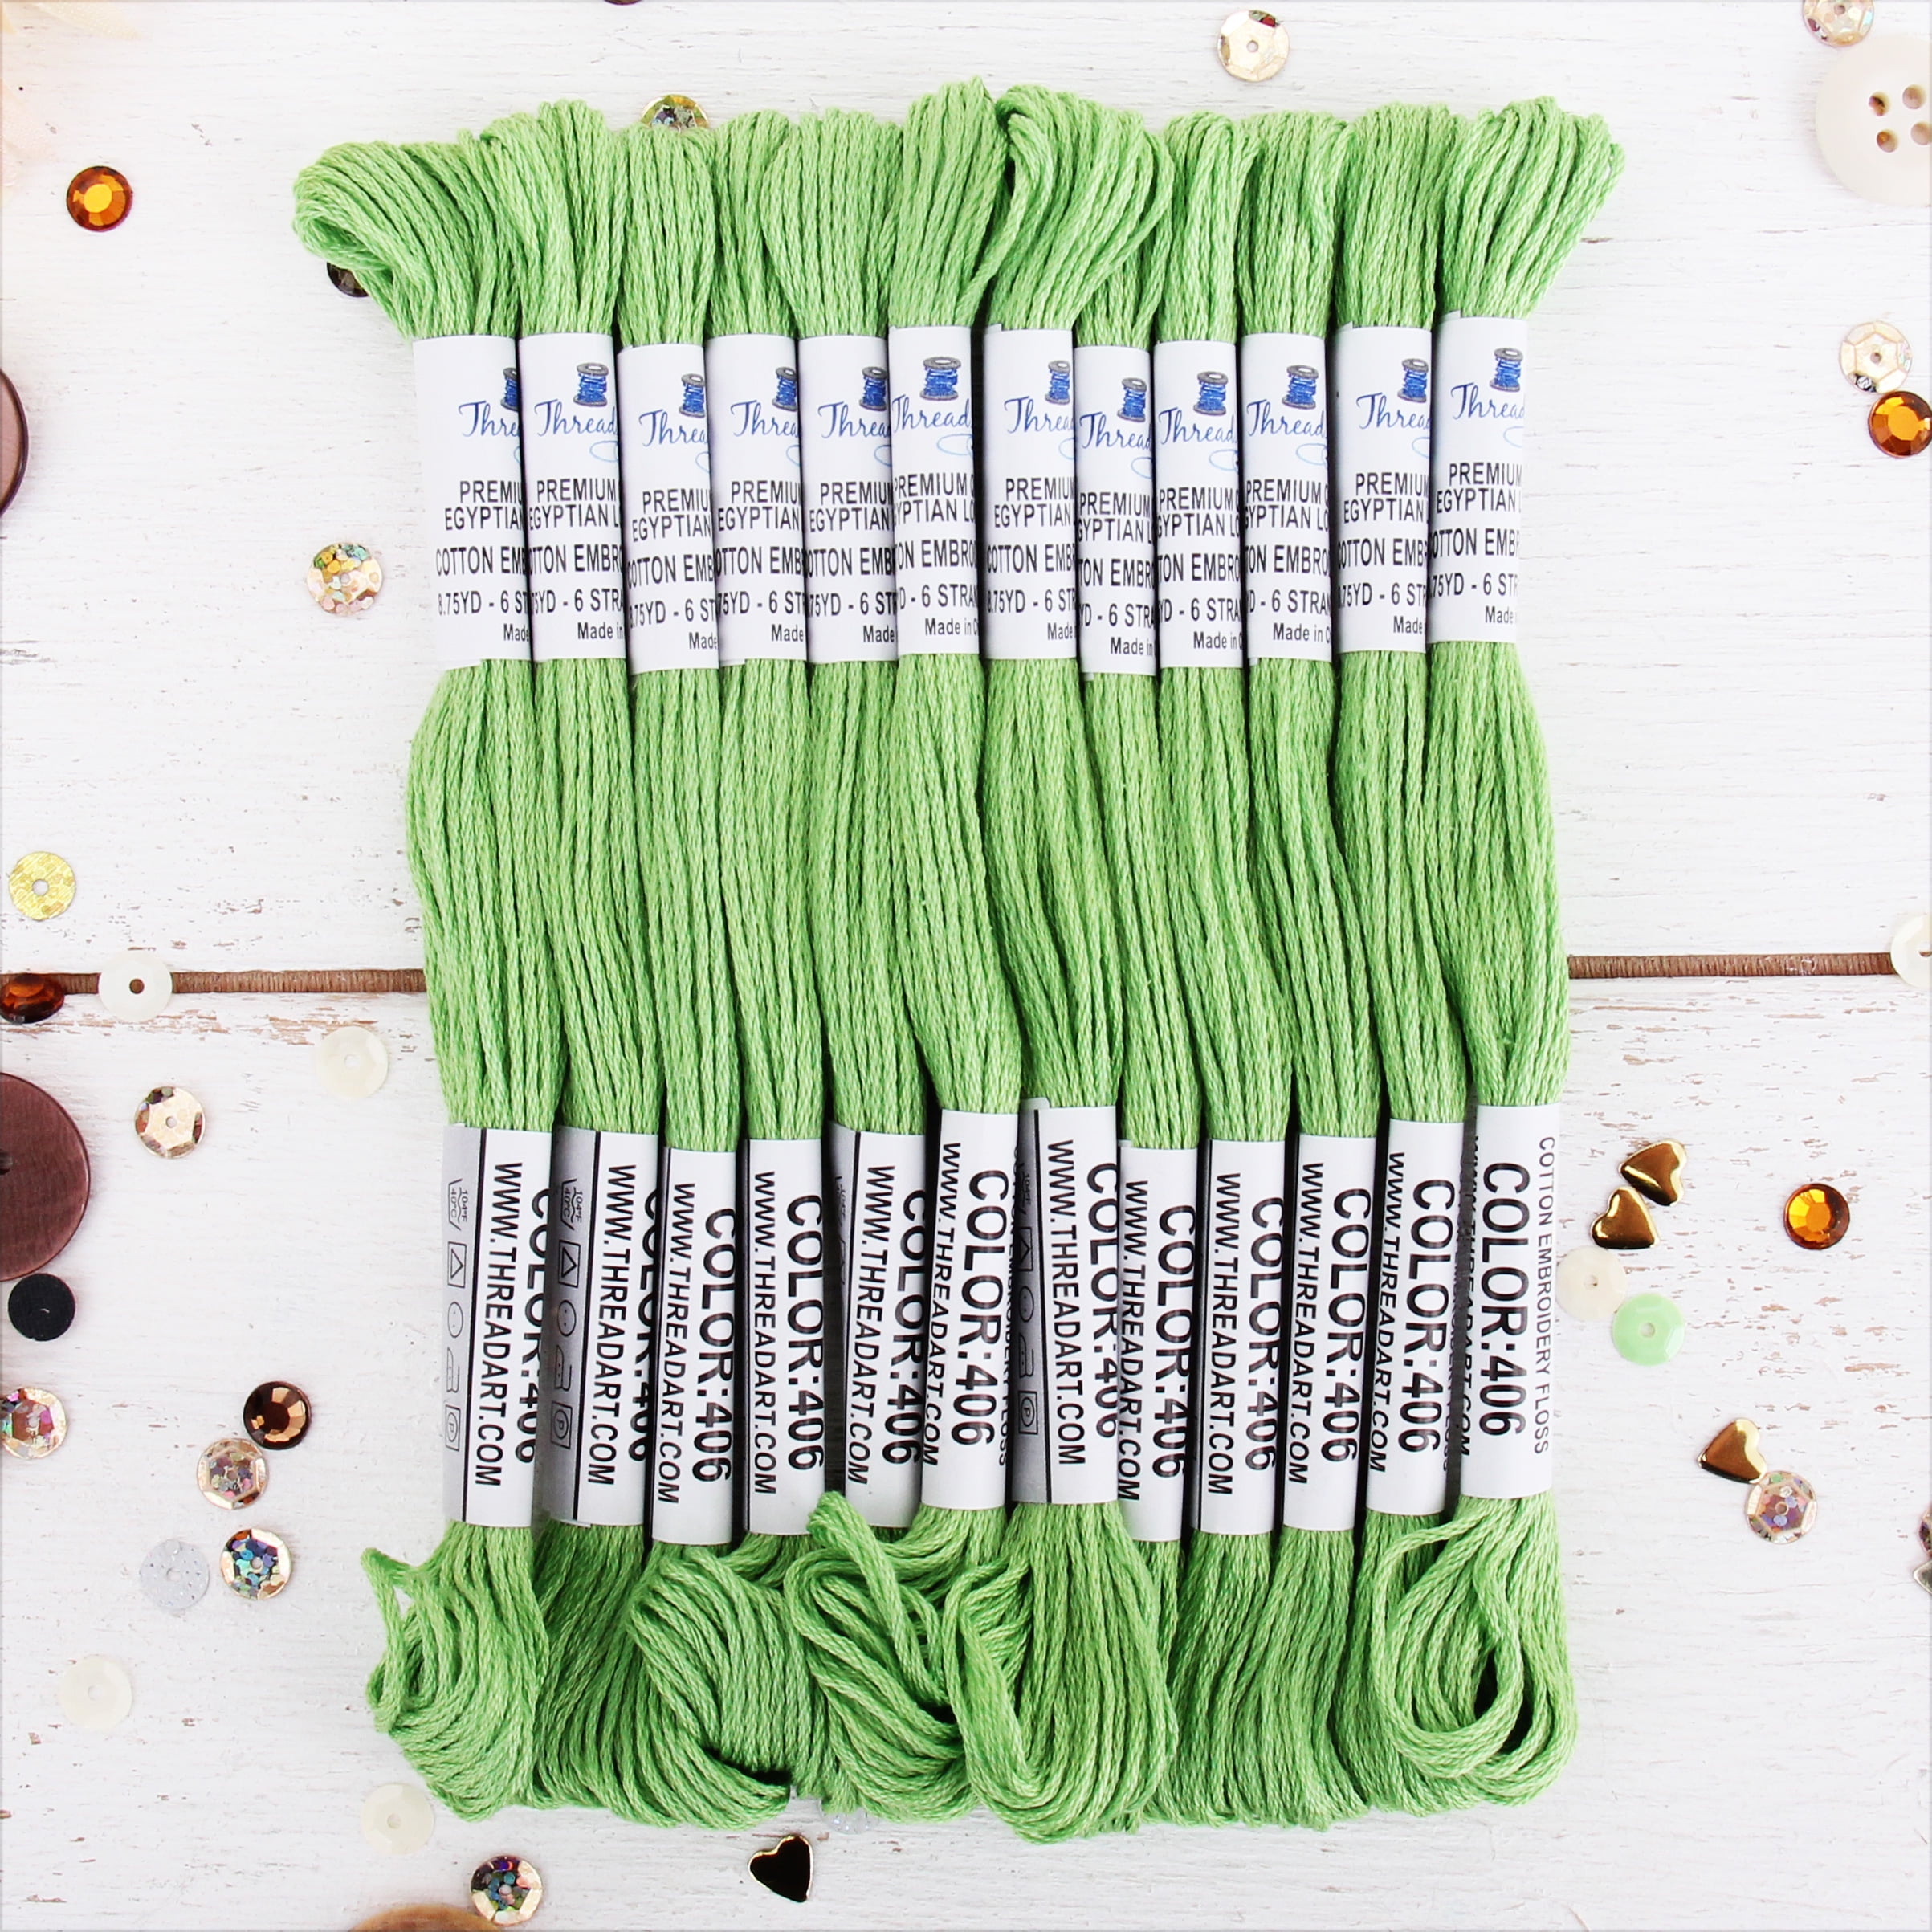  Dmc 6-Strand Embroidery Cotton 8.7yd-Dark Moss Green